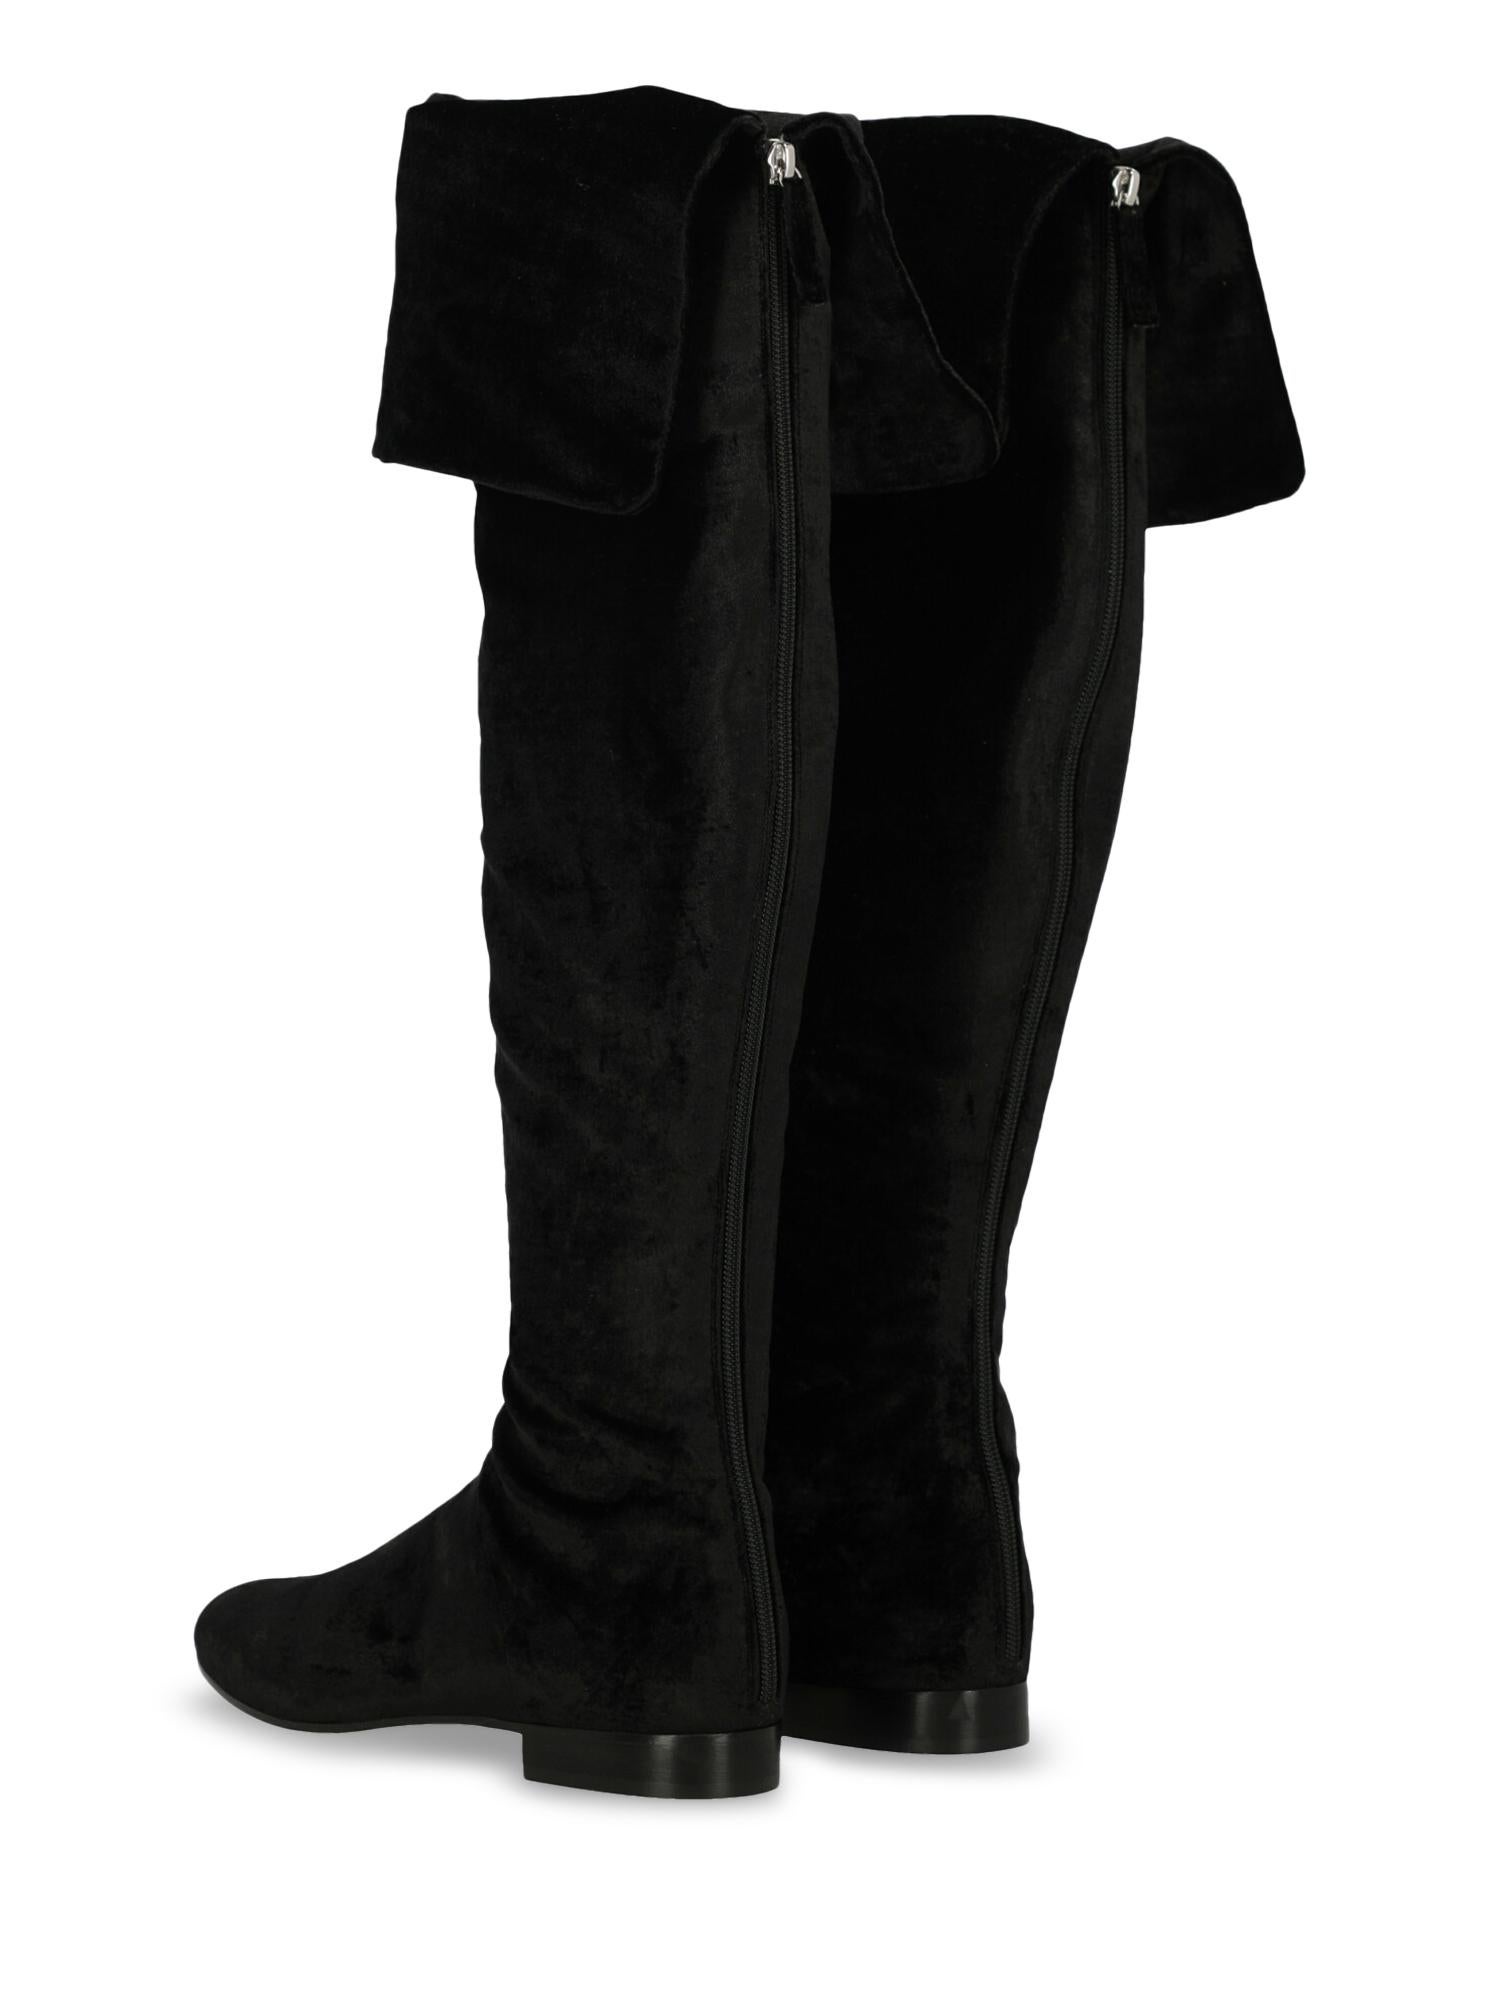 Women's Alberta Ferretti Woman Boots Black Fabric IT 39 For Sale